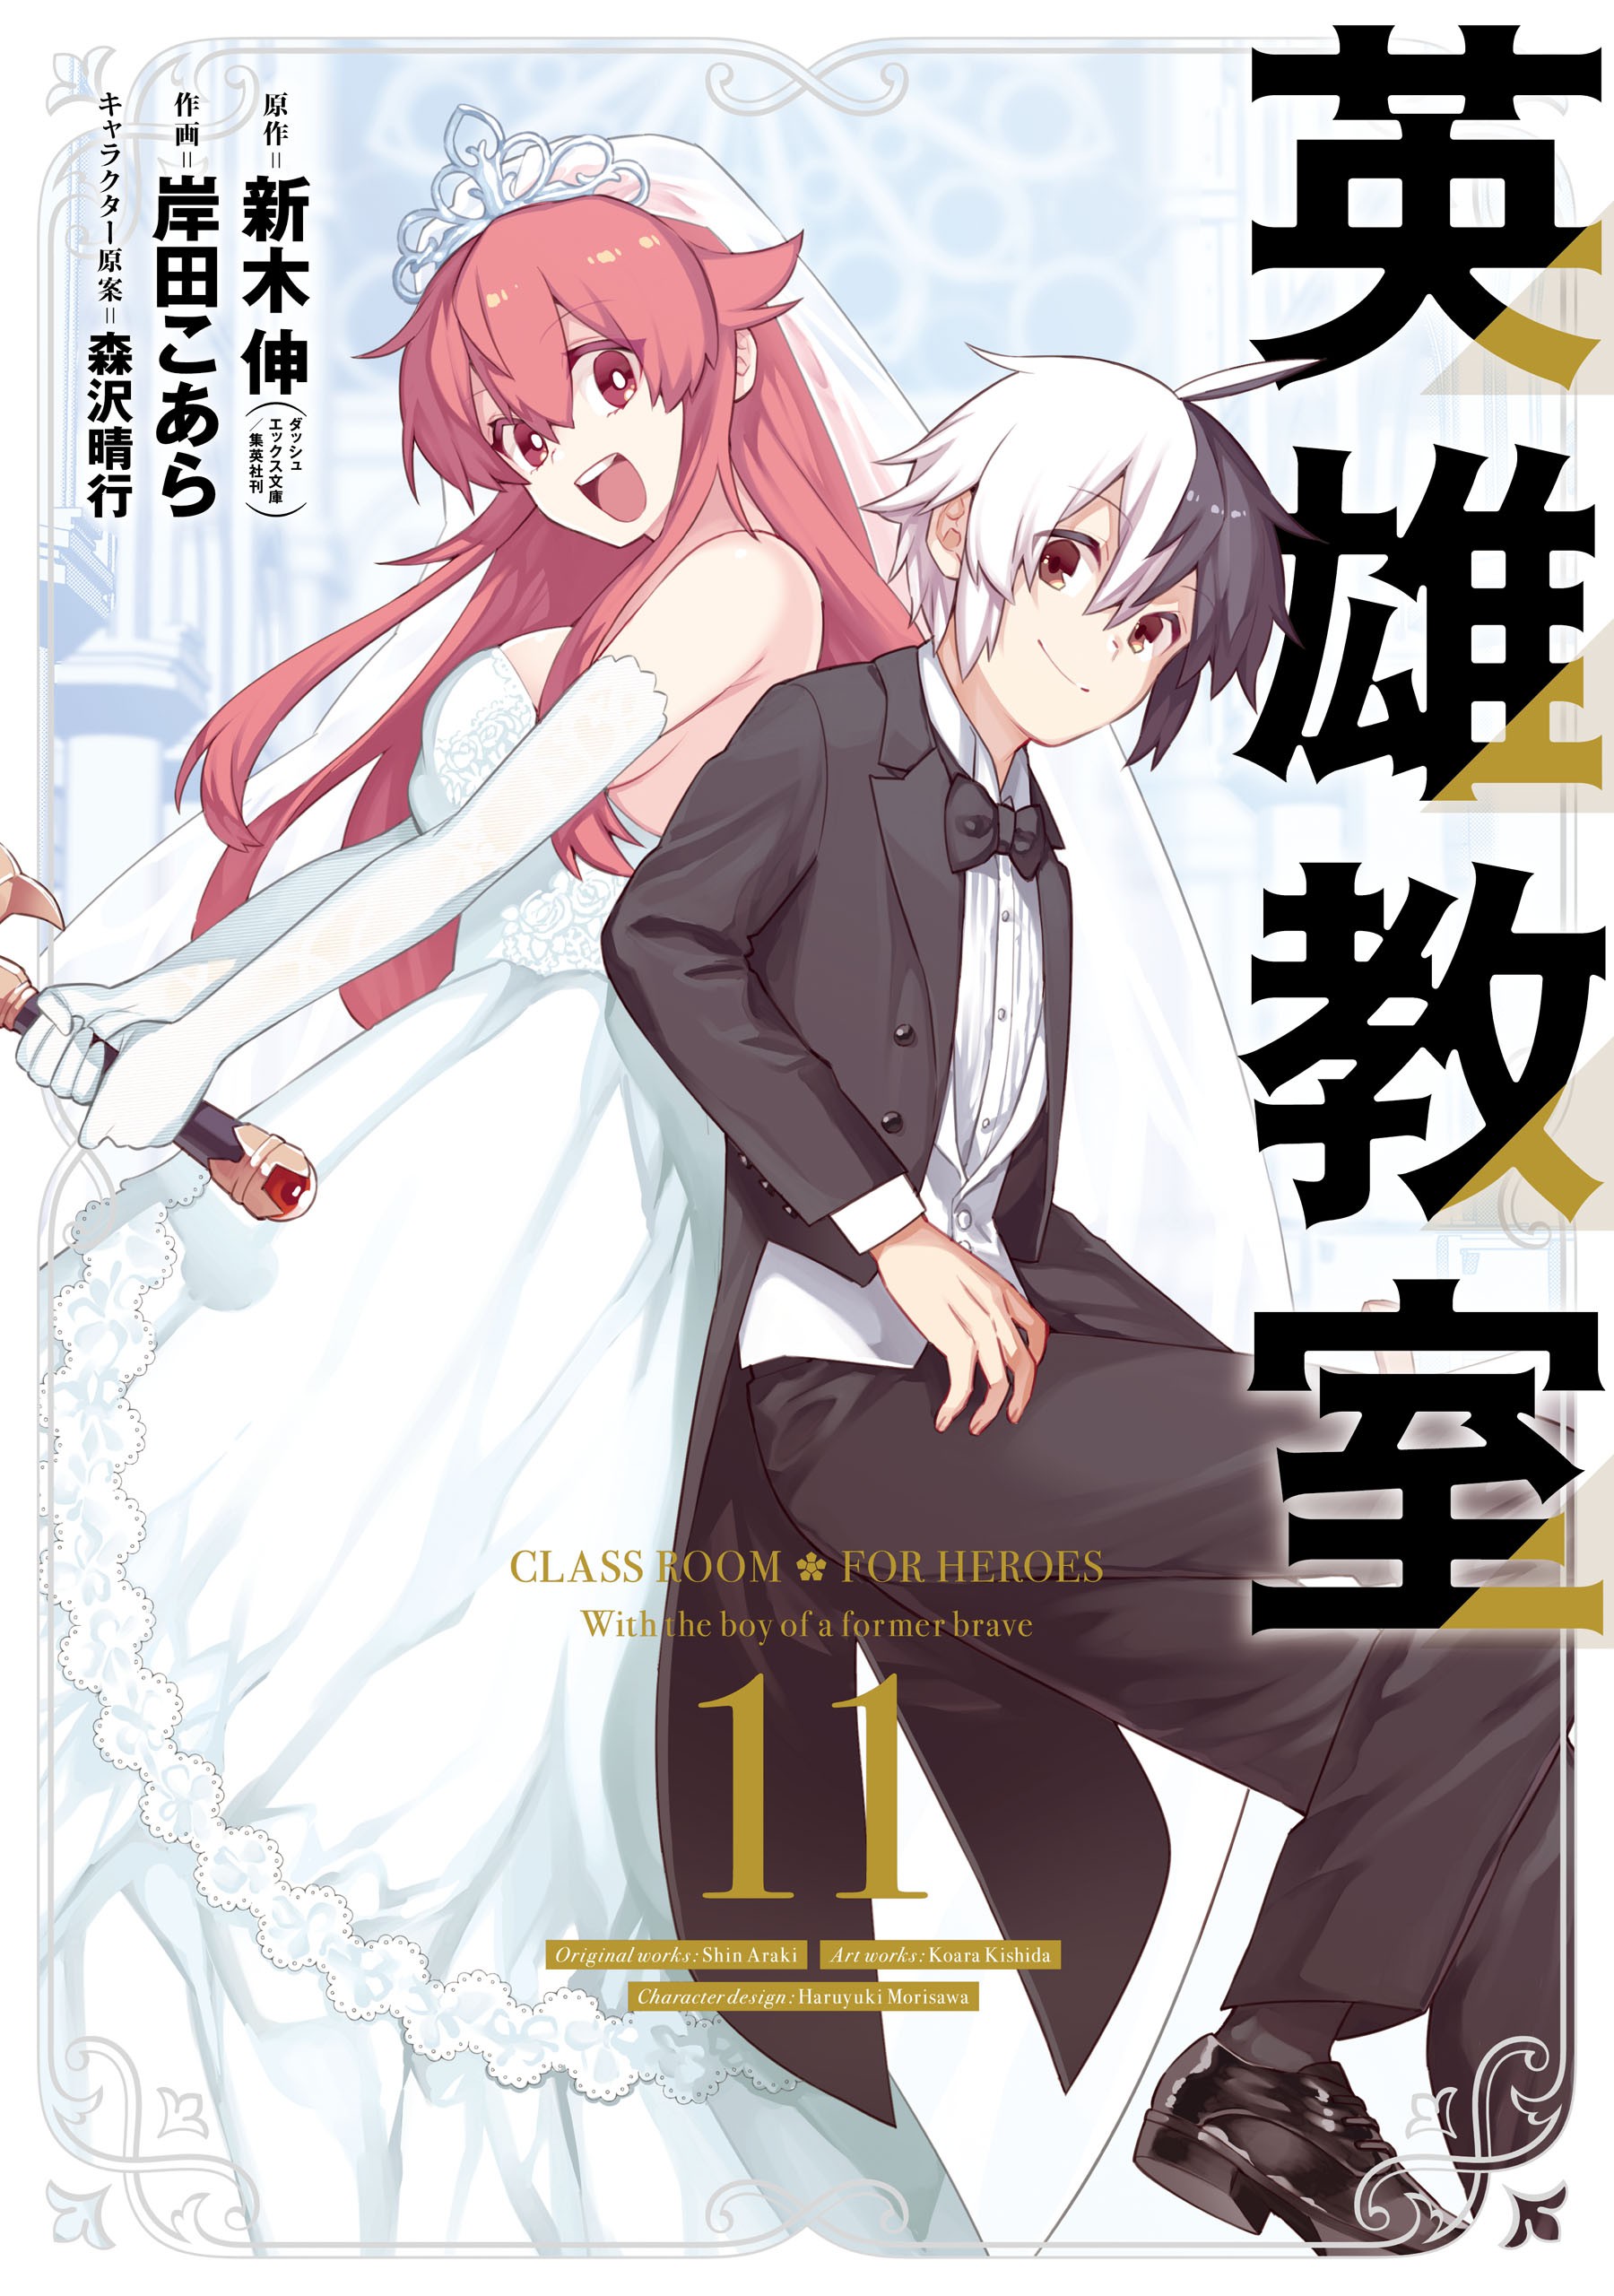 SL](Request) Eiyuu Kyoushitsu : r/manga